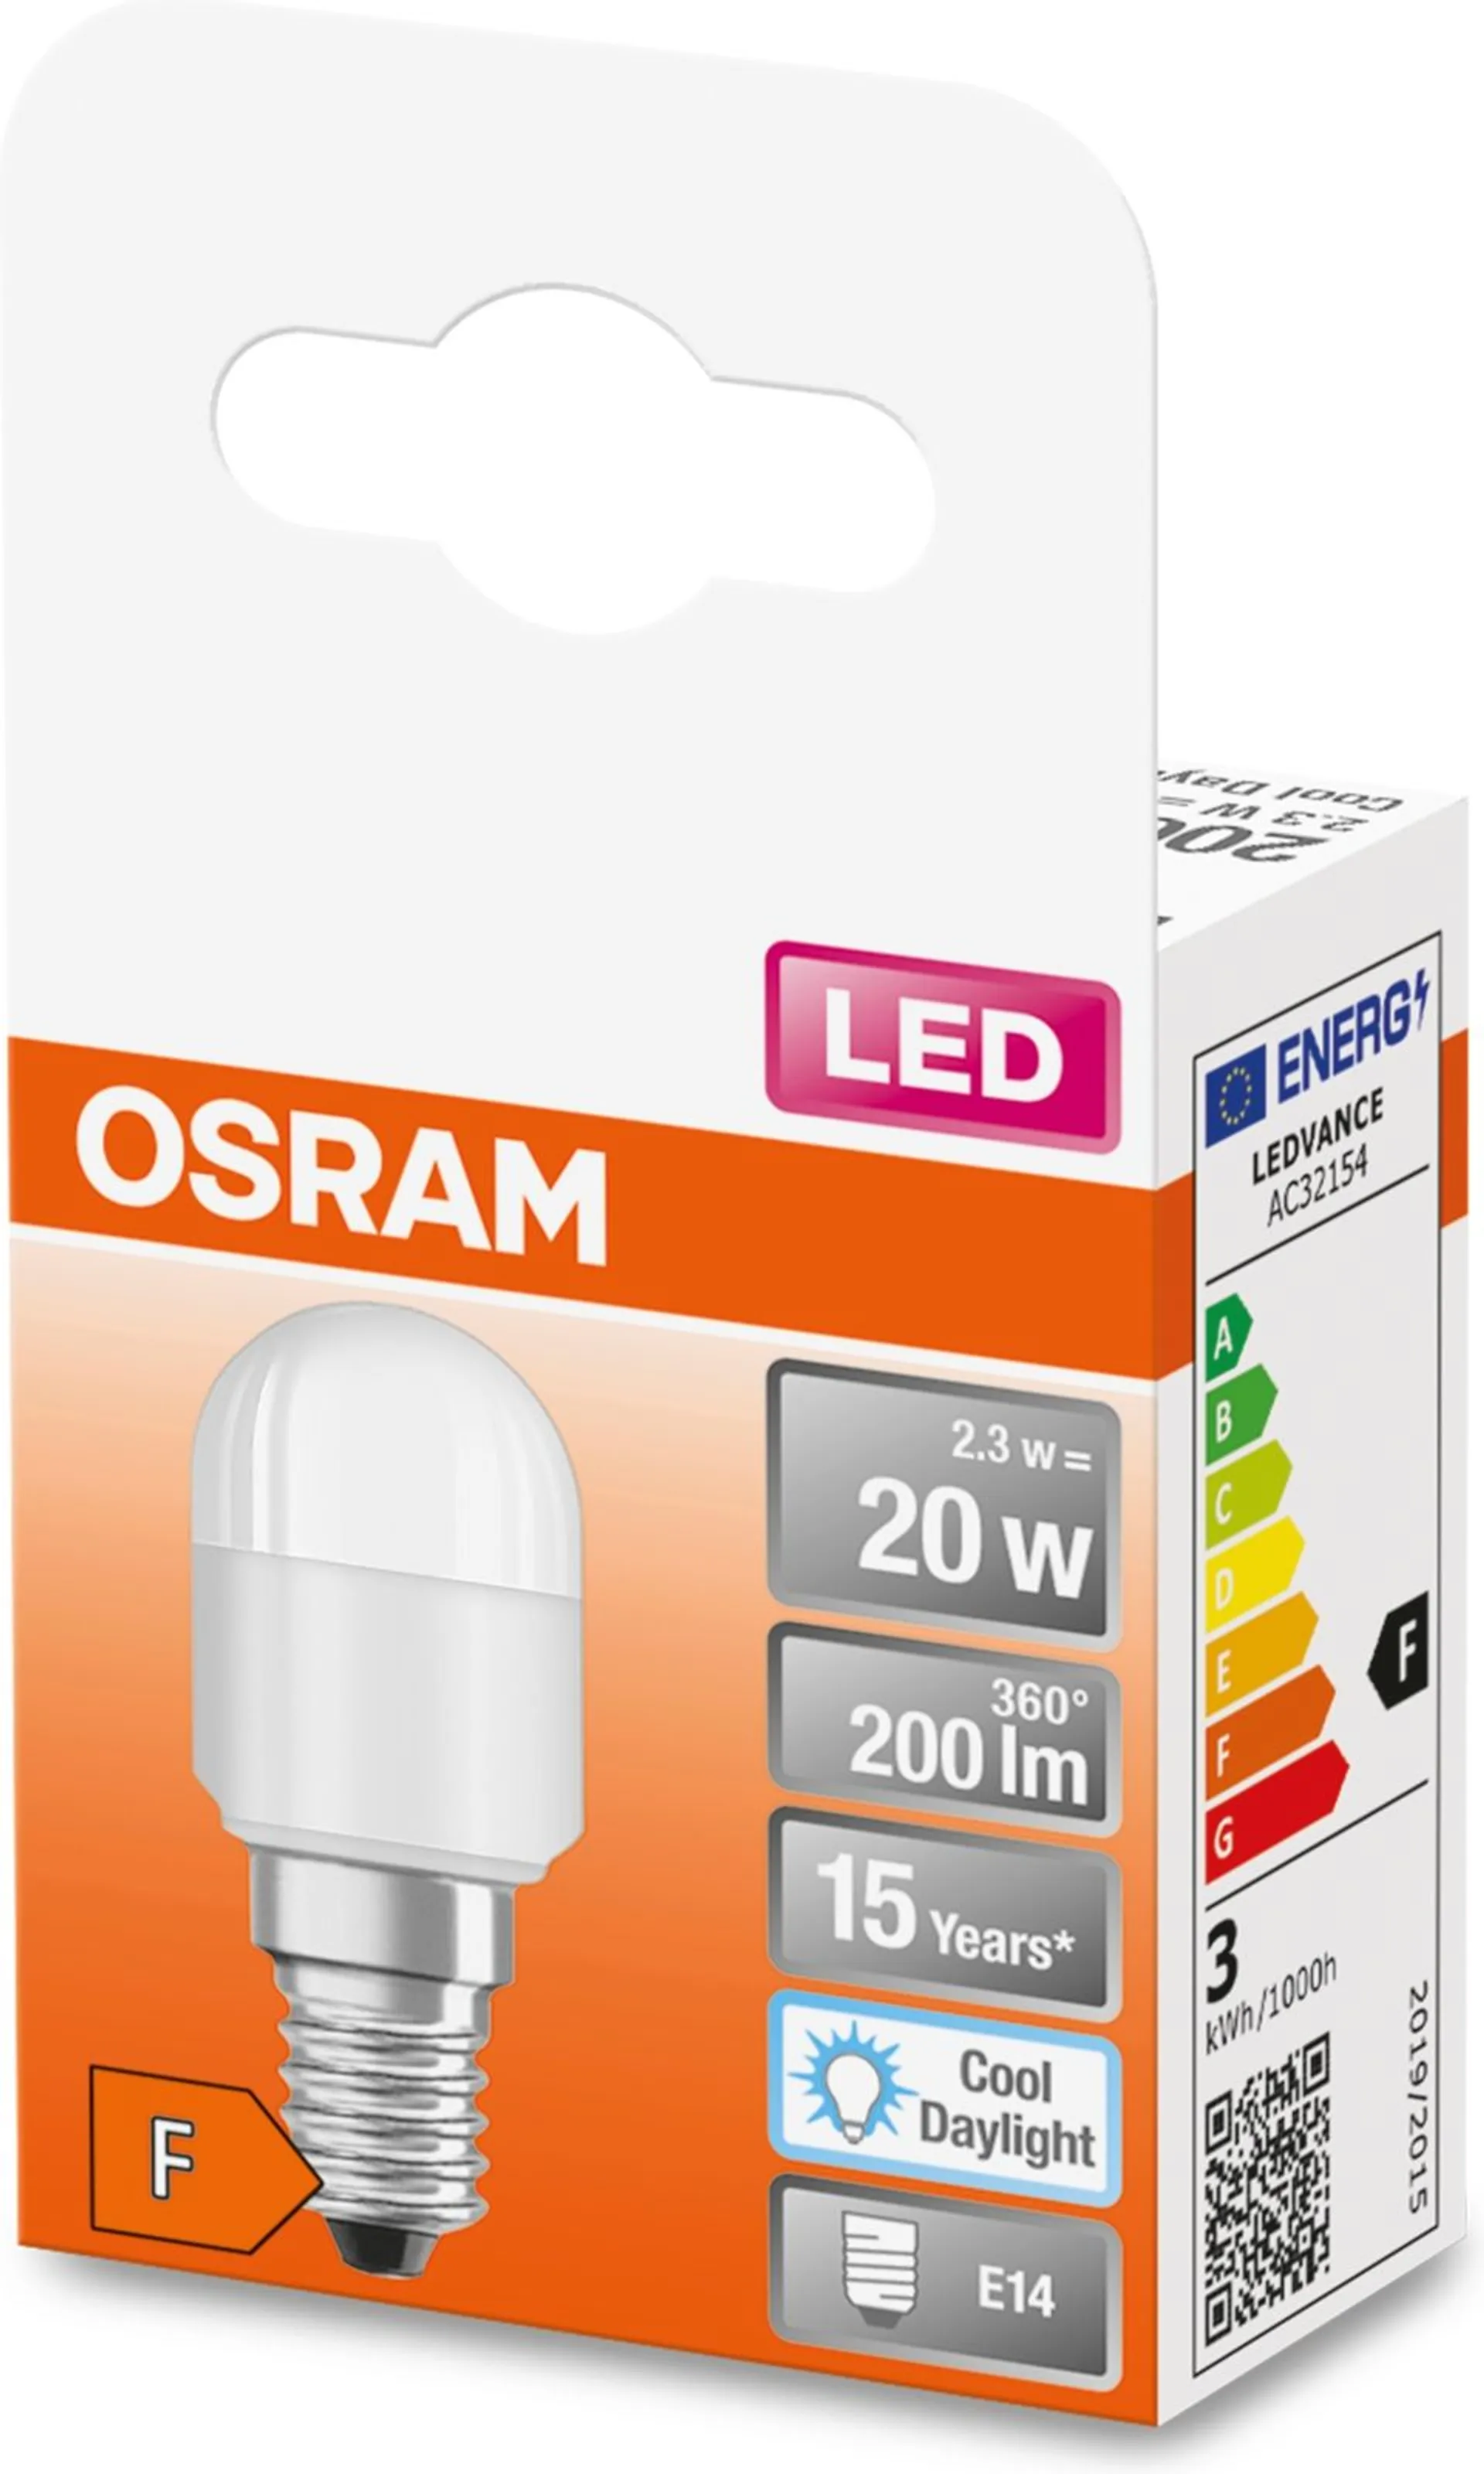 Osram LED jääkaappilamppu E14 2,3W, 200lm, 6500K - 3